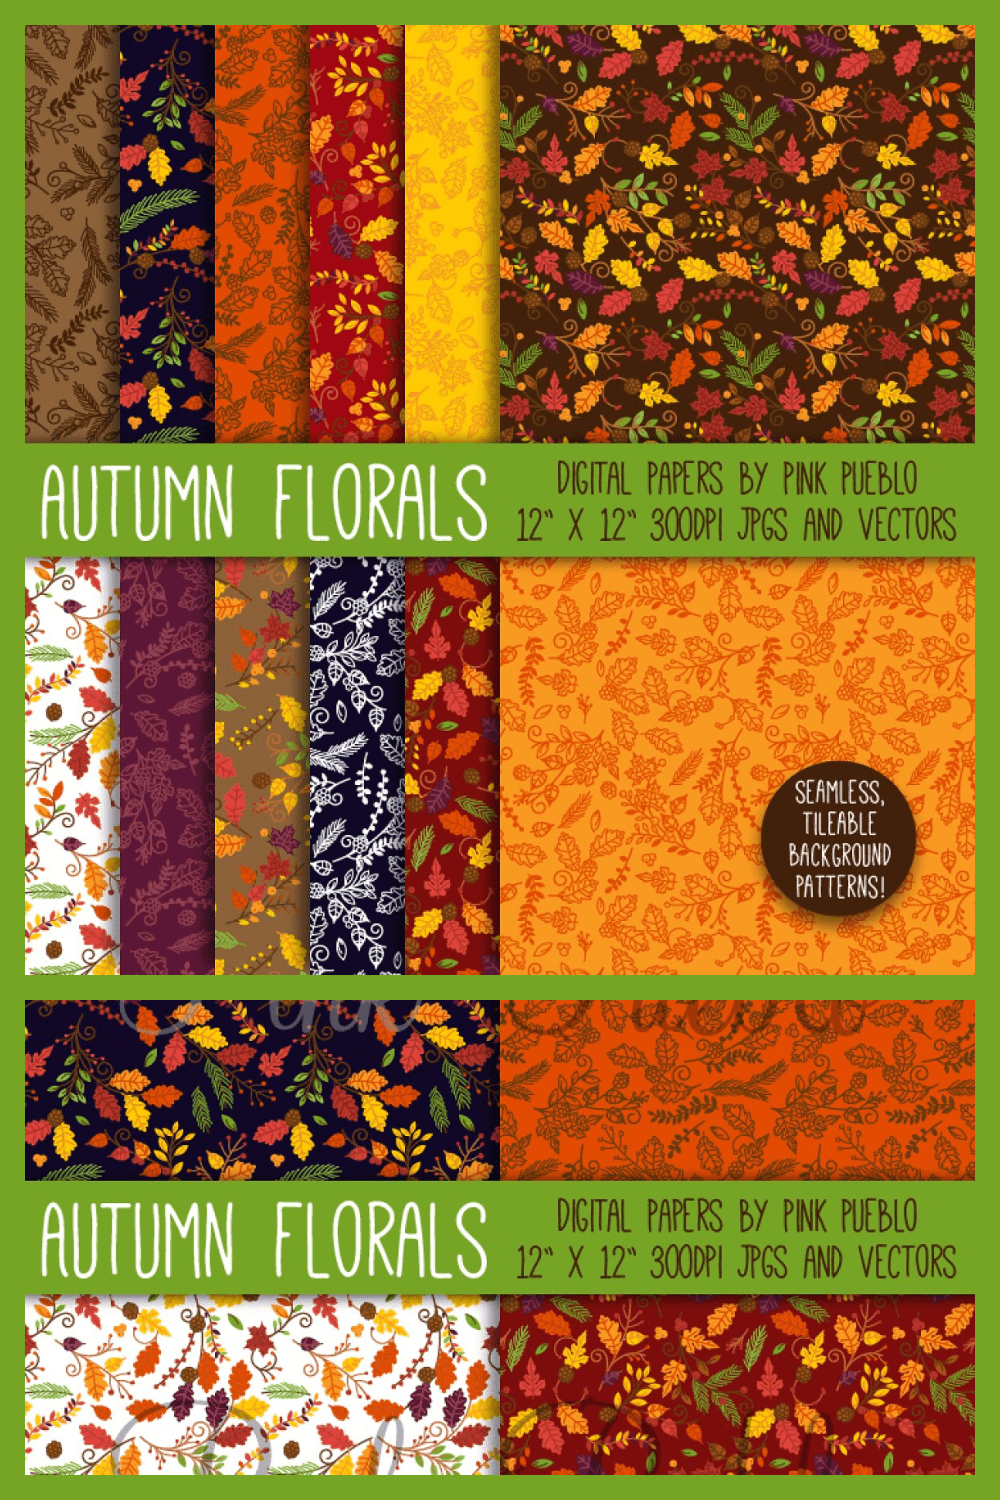 Autumn or Thanksgiving patterns by PinkPueblo.